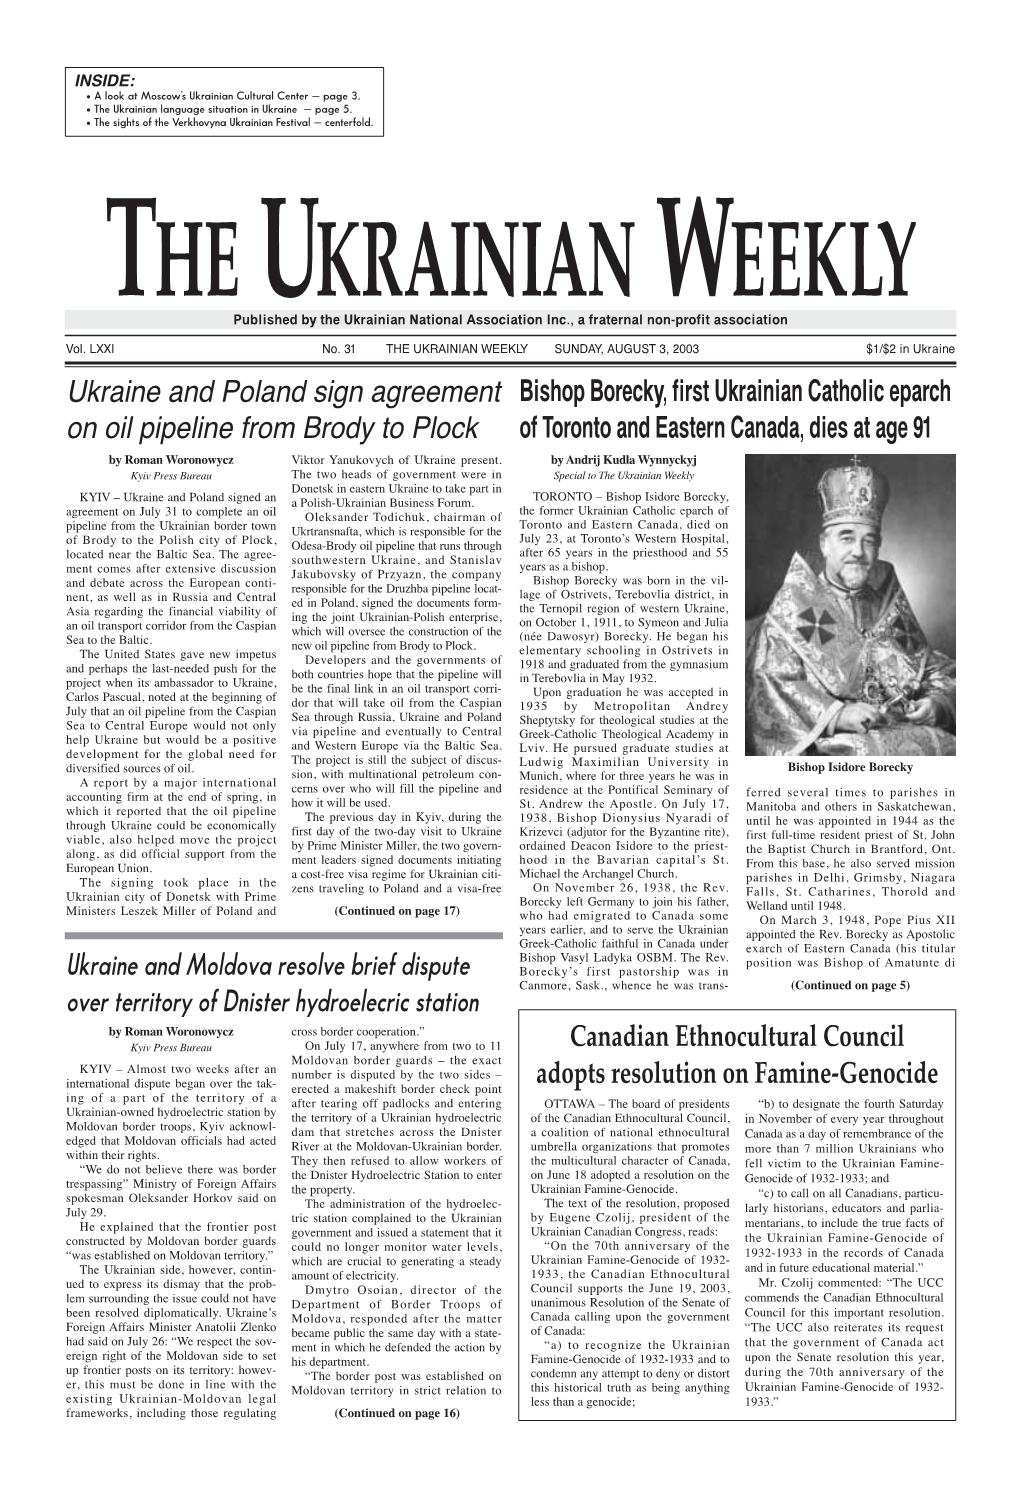 The Ukrainian Weekly 2003, No.31